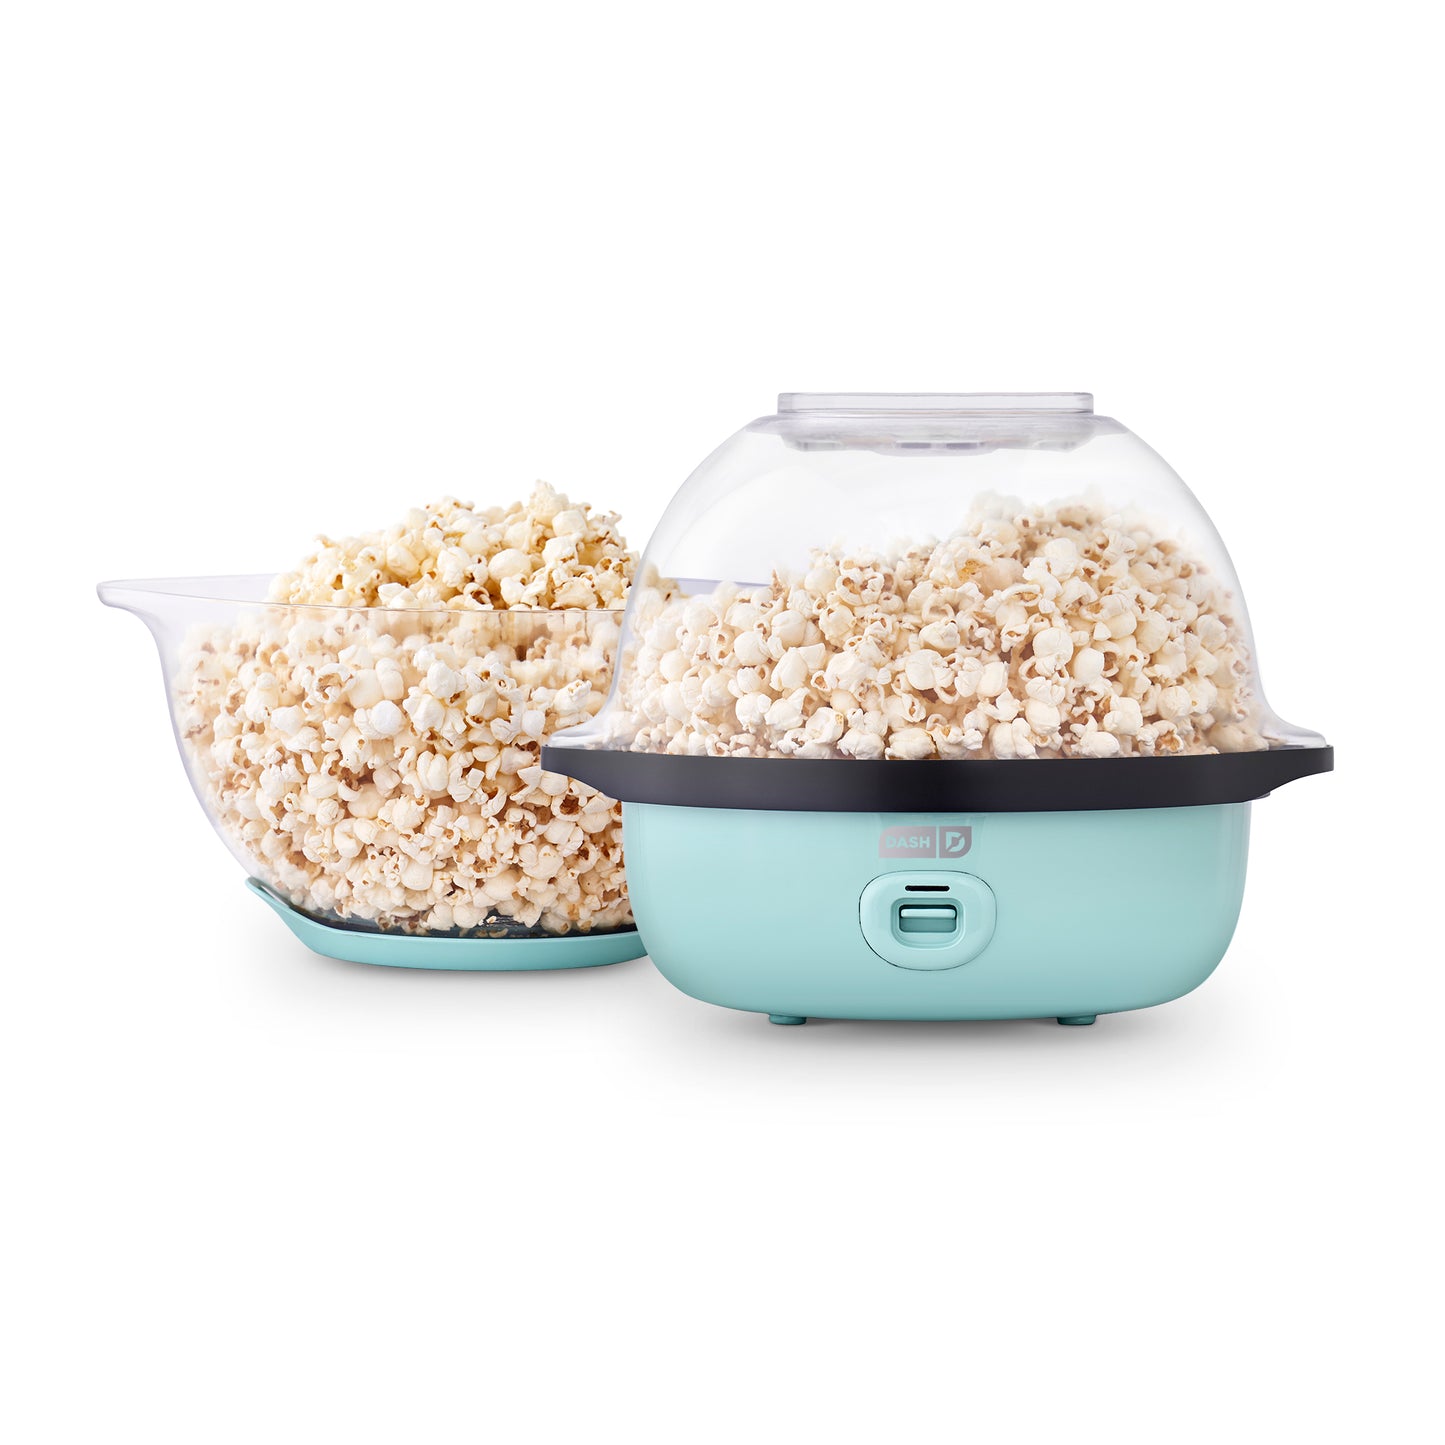 Dash Smart store Stirring Popcorn Maker - household items - by owner -  housewares sale - craigslist